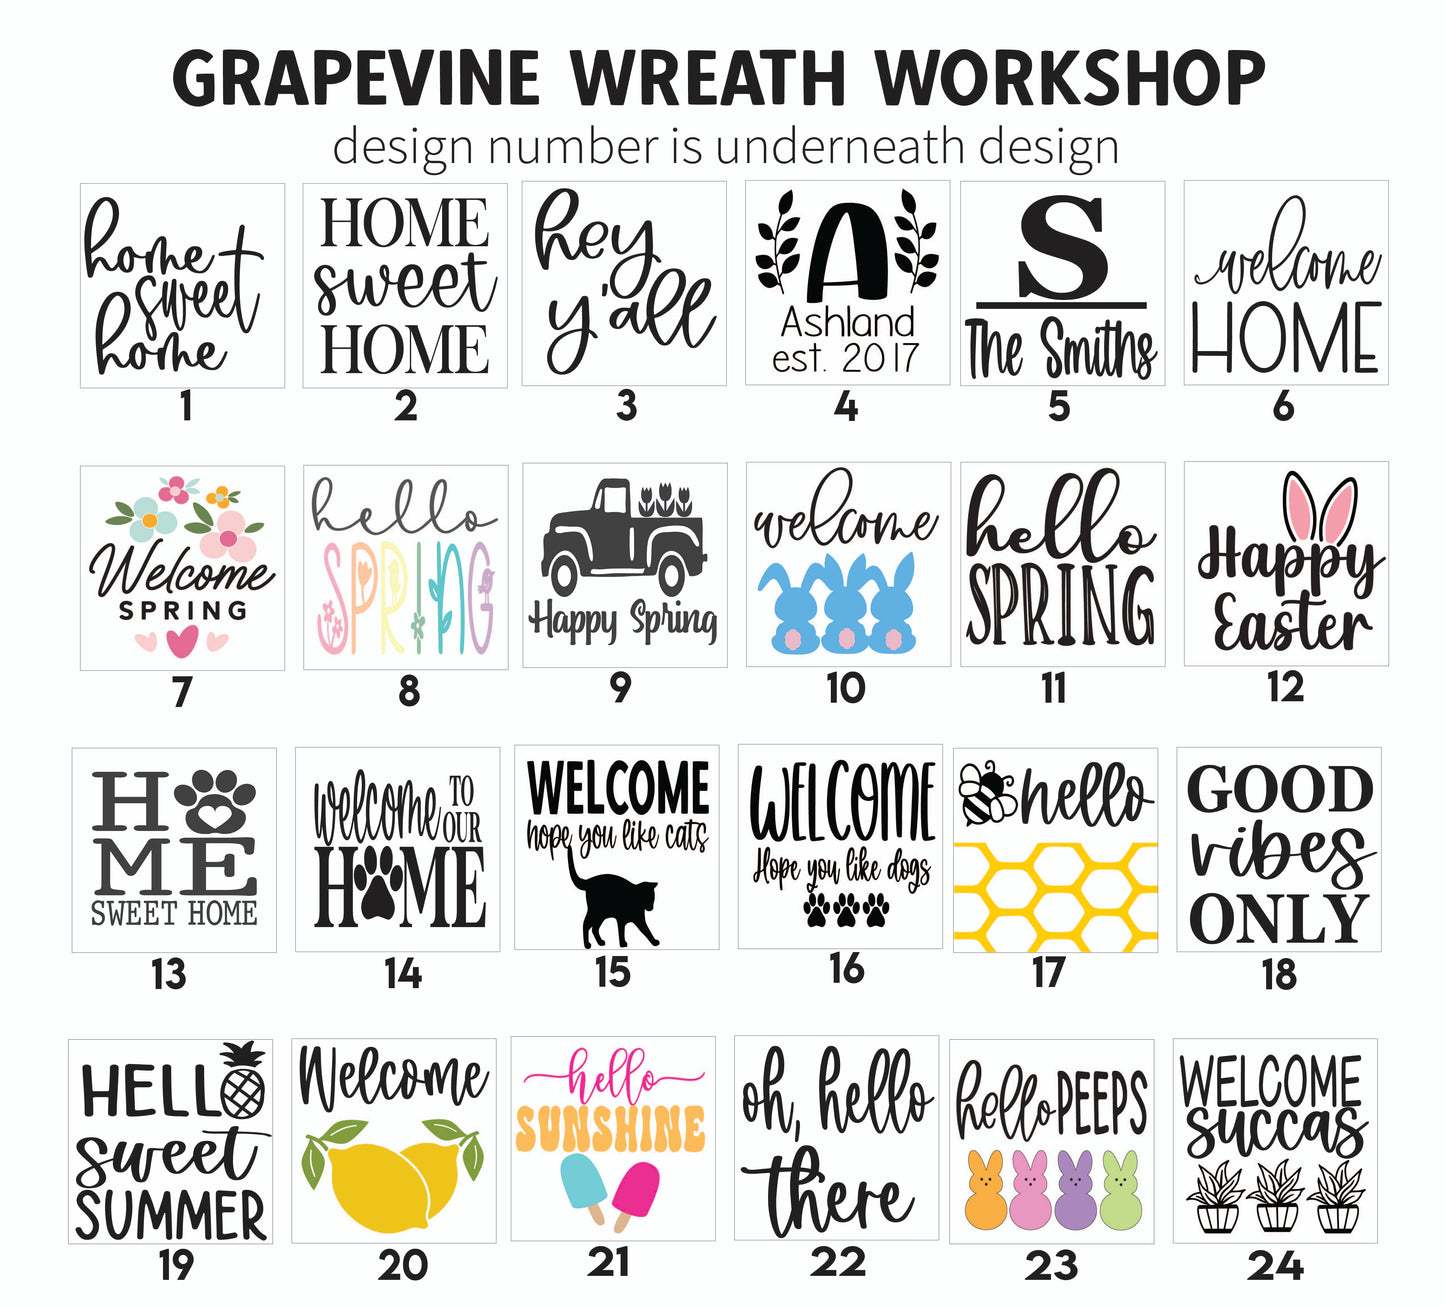 Private Workshop - Hallsley Neighborhood-  Grapevine Wreath Workshop - 2/27 - 6pm